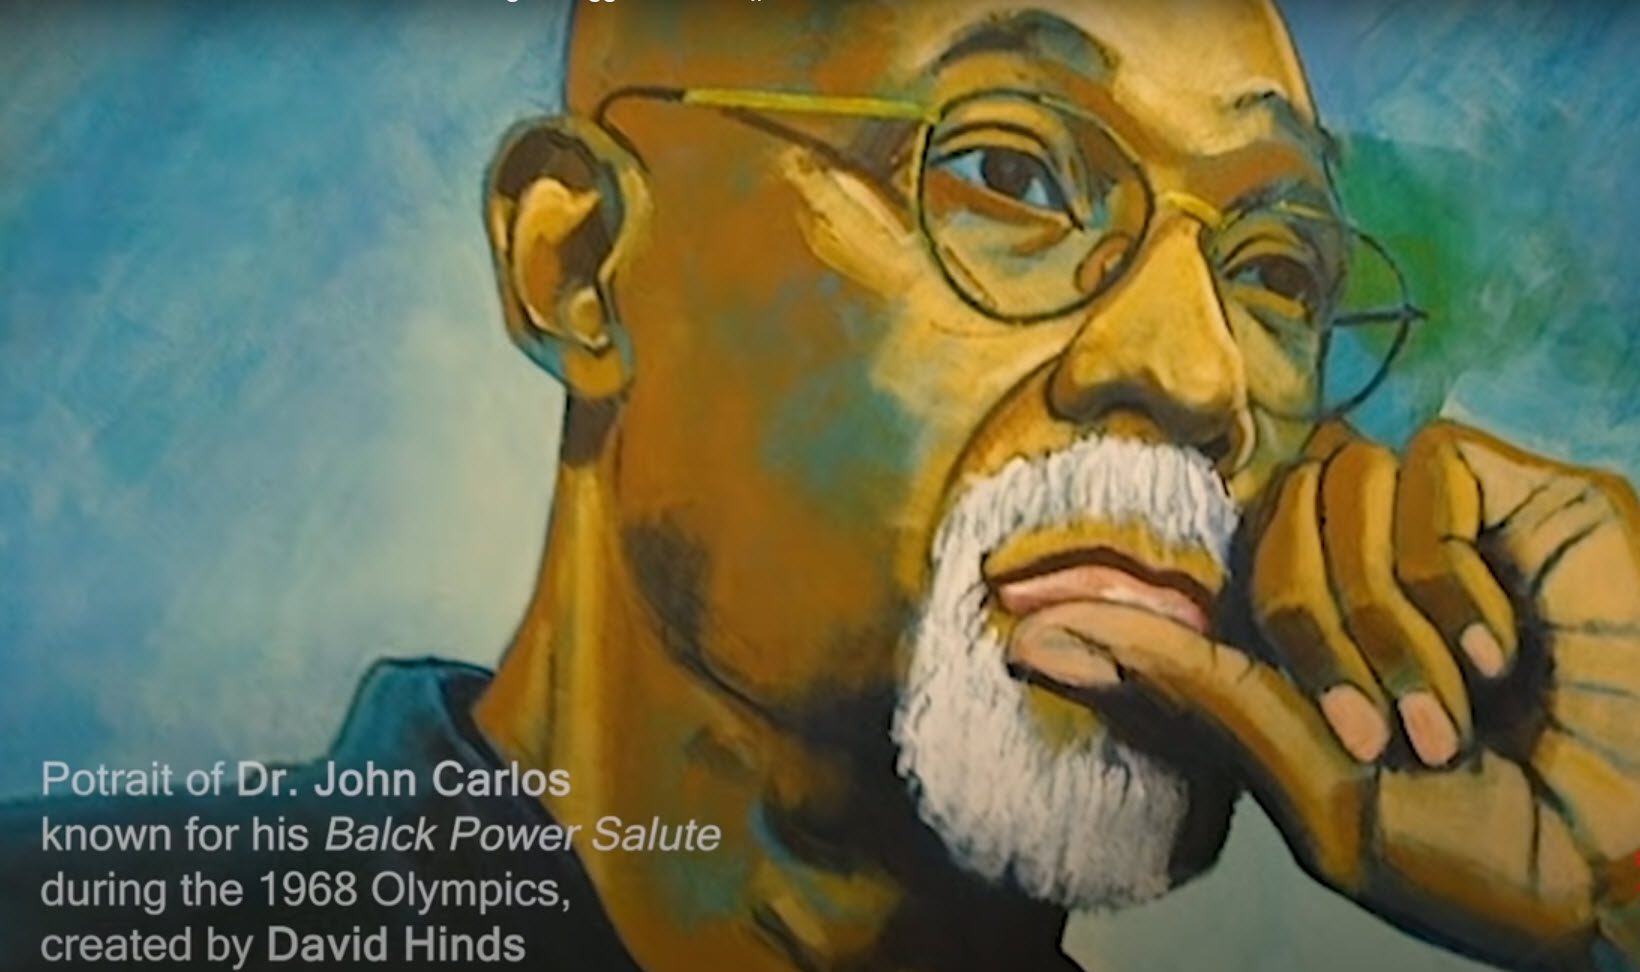 Dr. Johh Carlos portrait by David Hinds